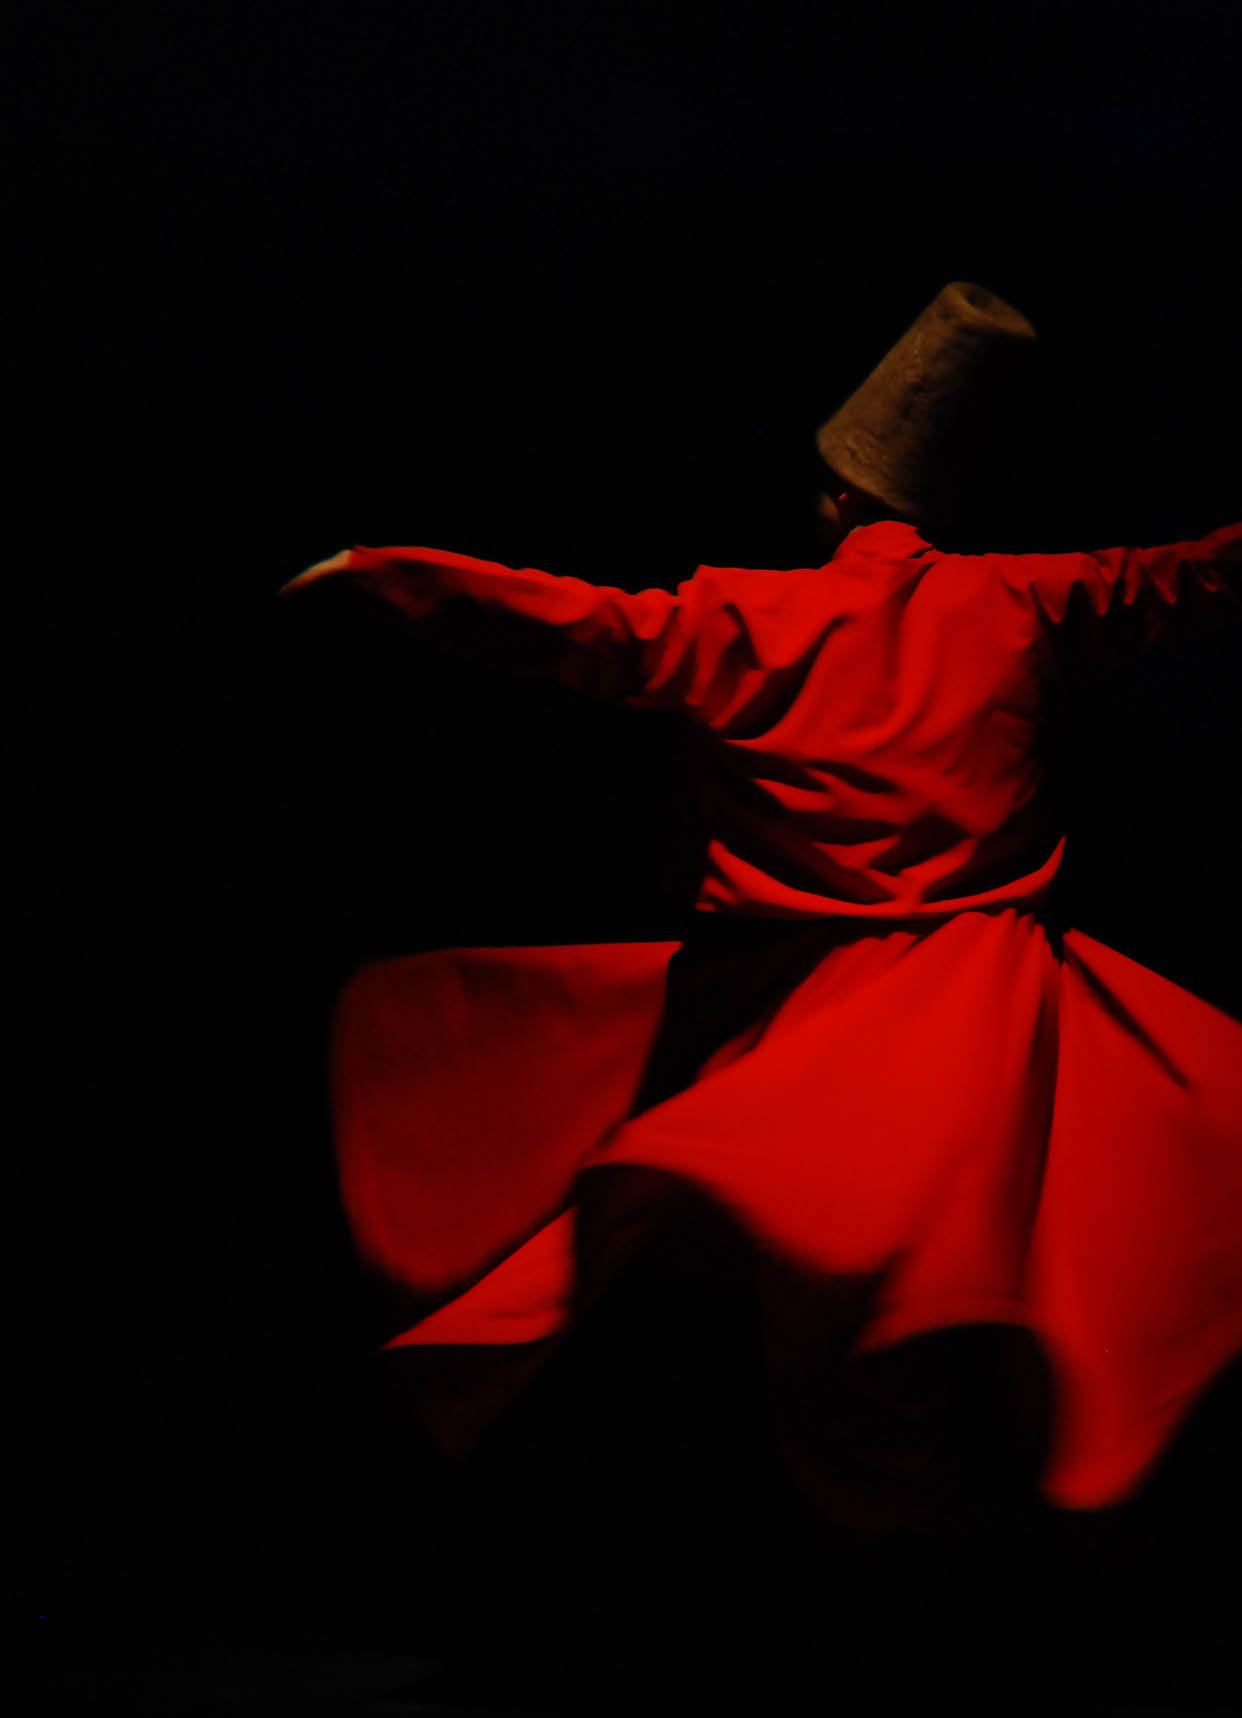 Whirling dervish in red garment on black background